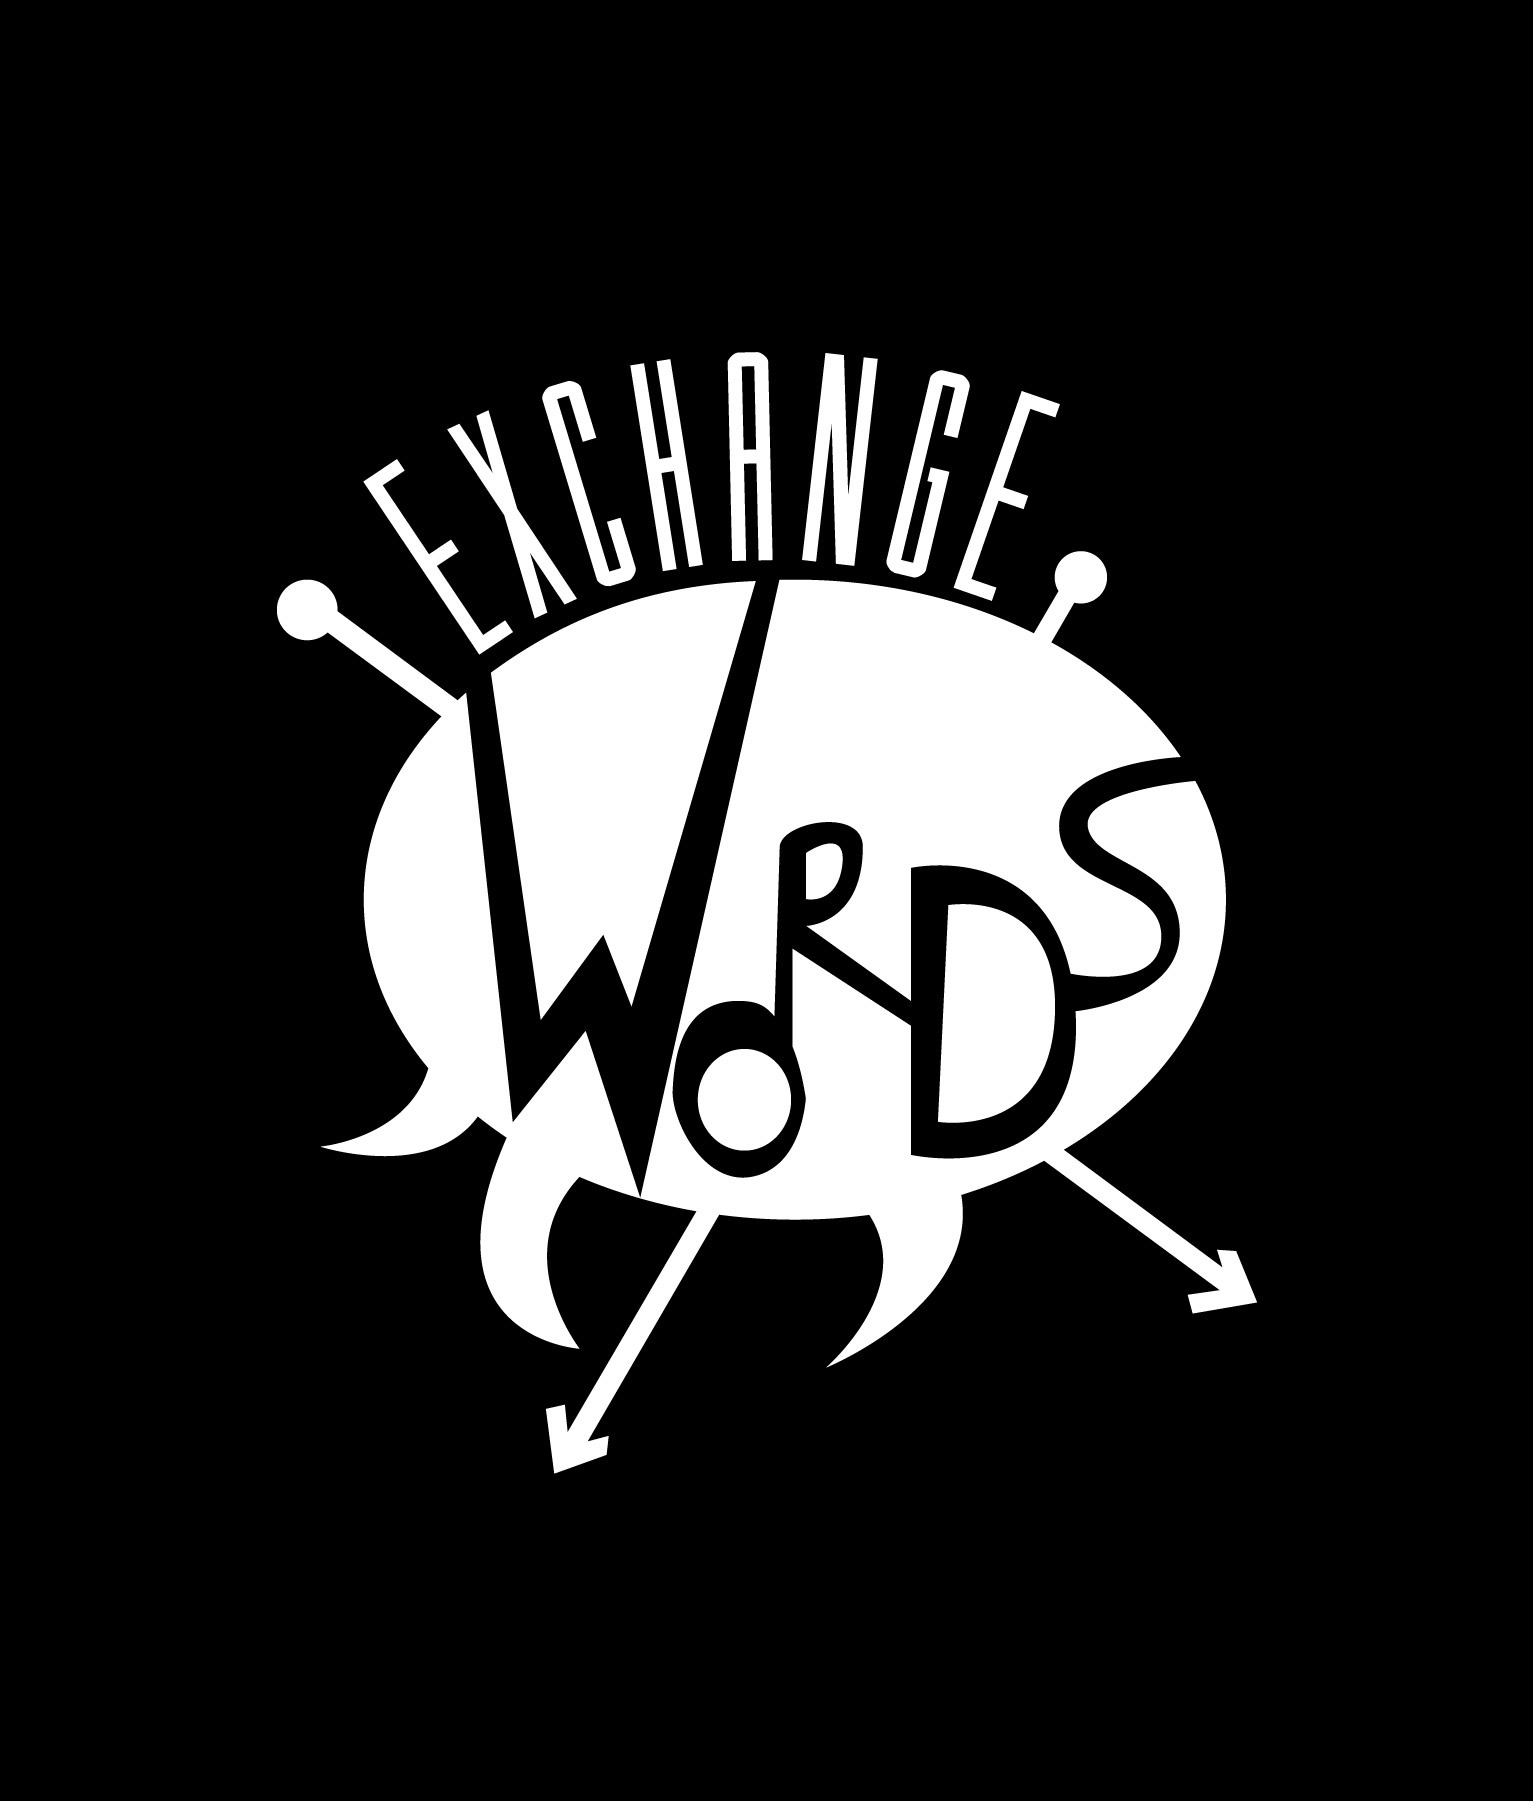 Exchange Words logo, white on black